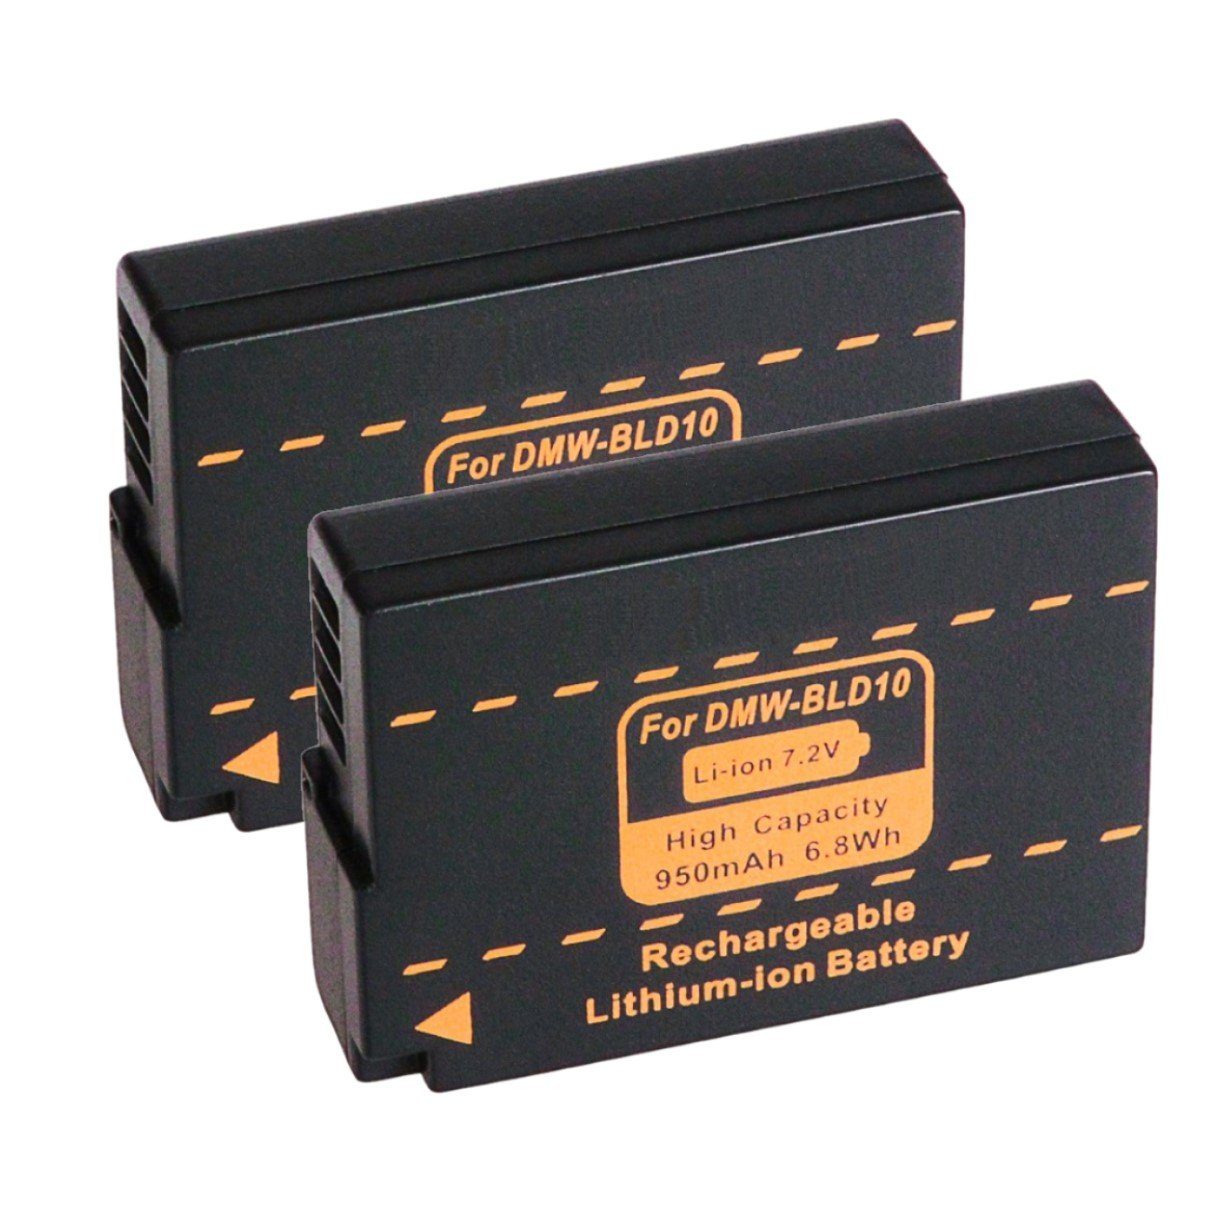 GOLDBATT 2x Akku für Panasonic BLD10 BLD10E DMC-GF2 GF2 Kamera-Akku Ersatzakku 950 mAh (7,2 V, 2 St), 100% kompatibel mit den Original Akkus durch maßgefertigte Passform inklusive Überhitzungsschutz